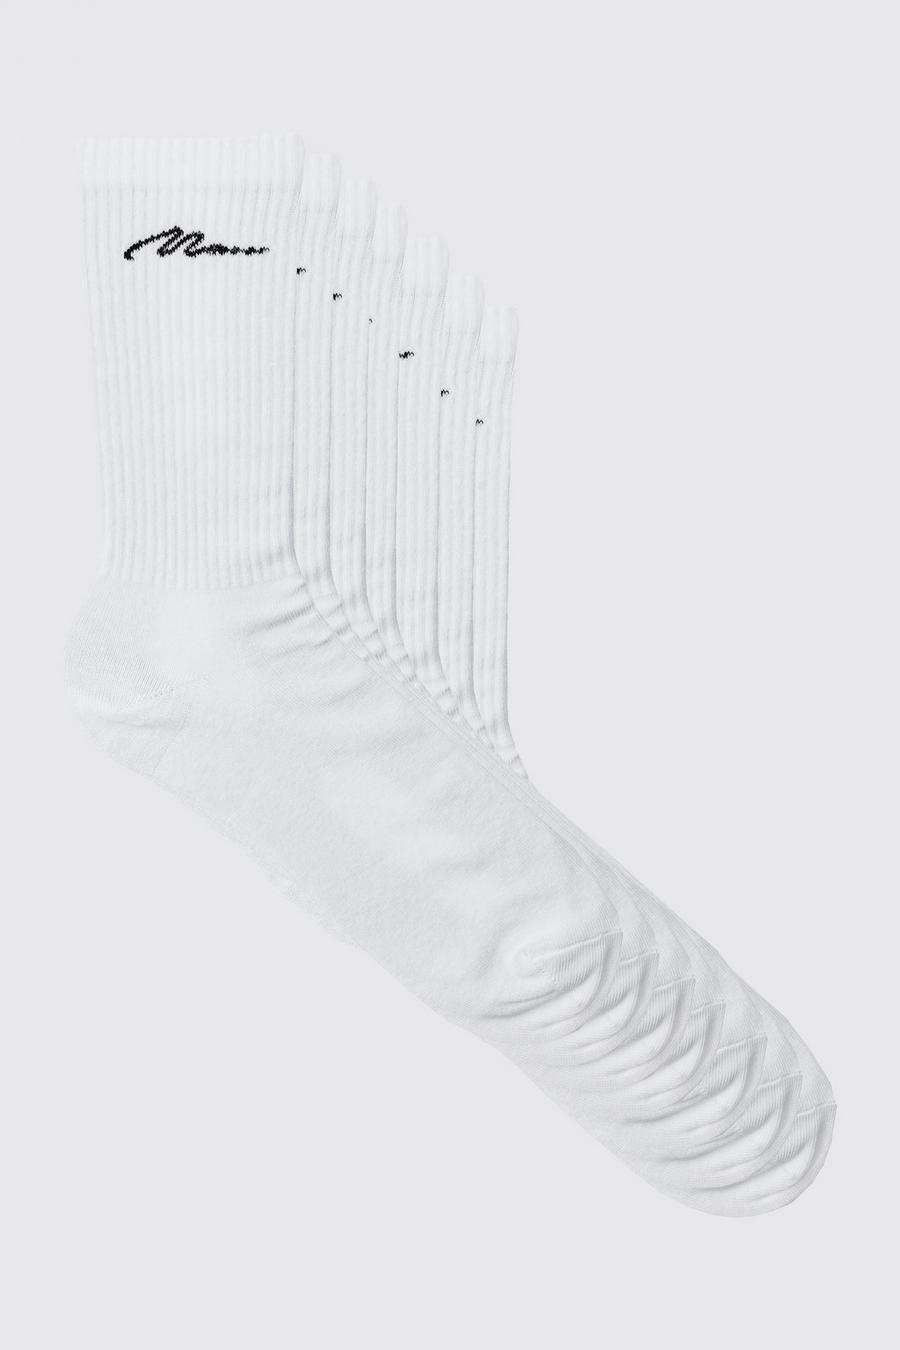 Pack de 7 pares de calcetines deportivos con firma MAN, White